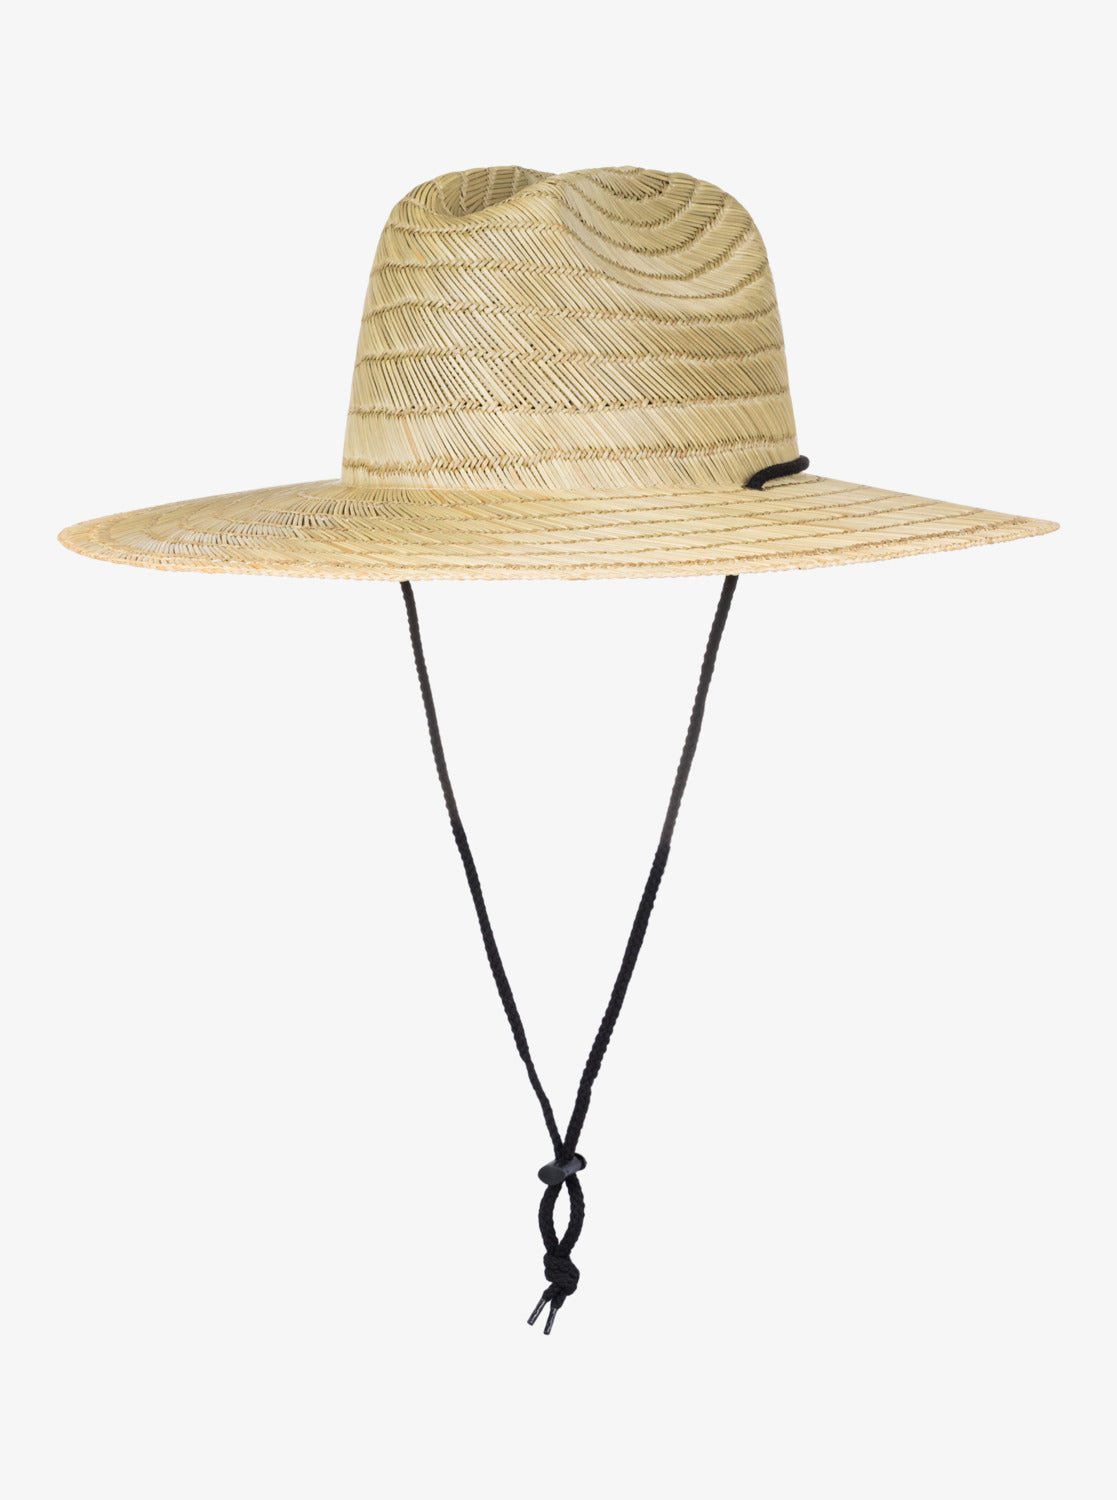 Quiksilver Pierside Straw Hat - Natural L/XL